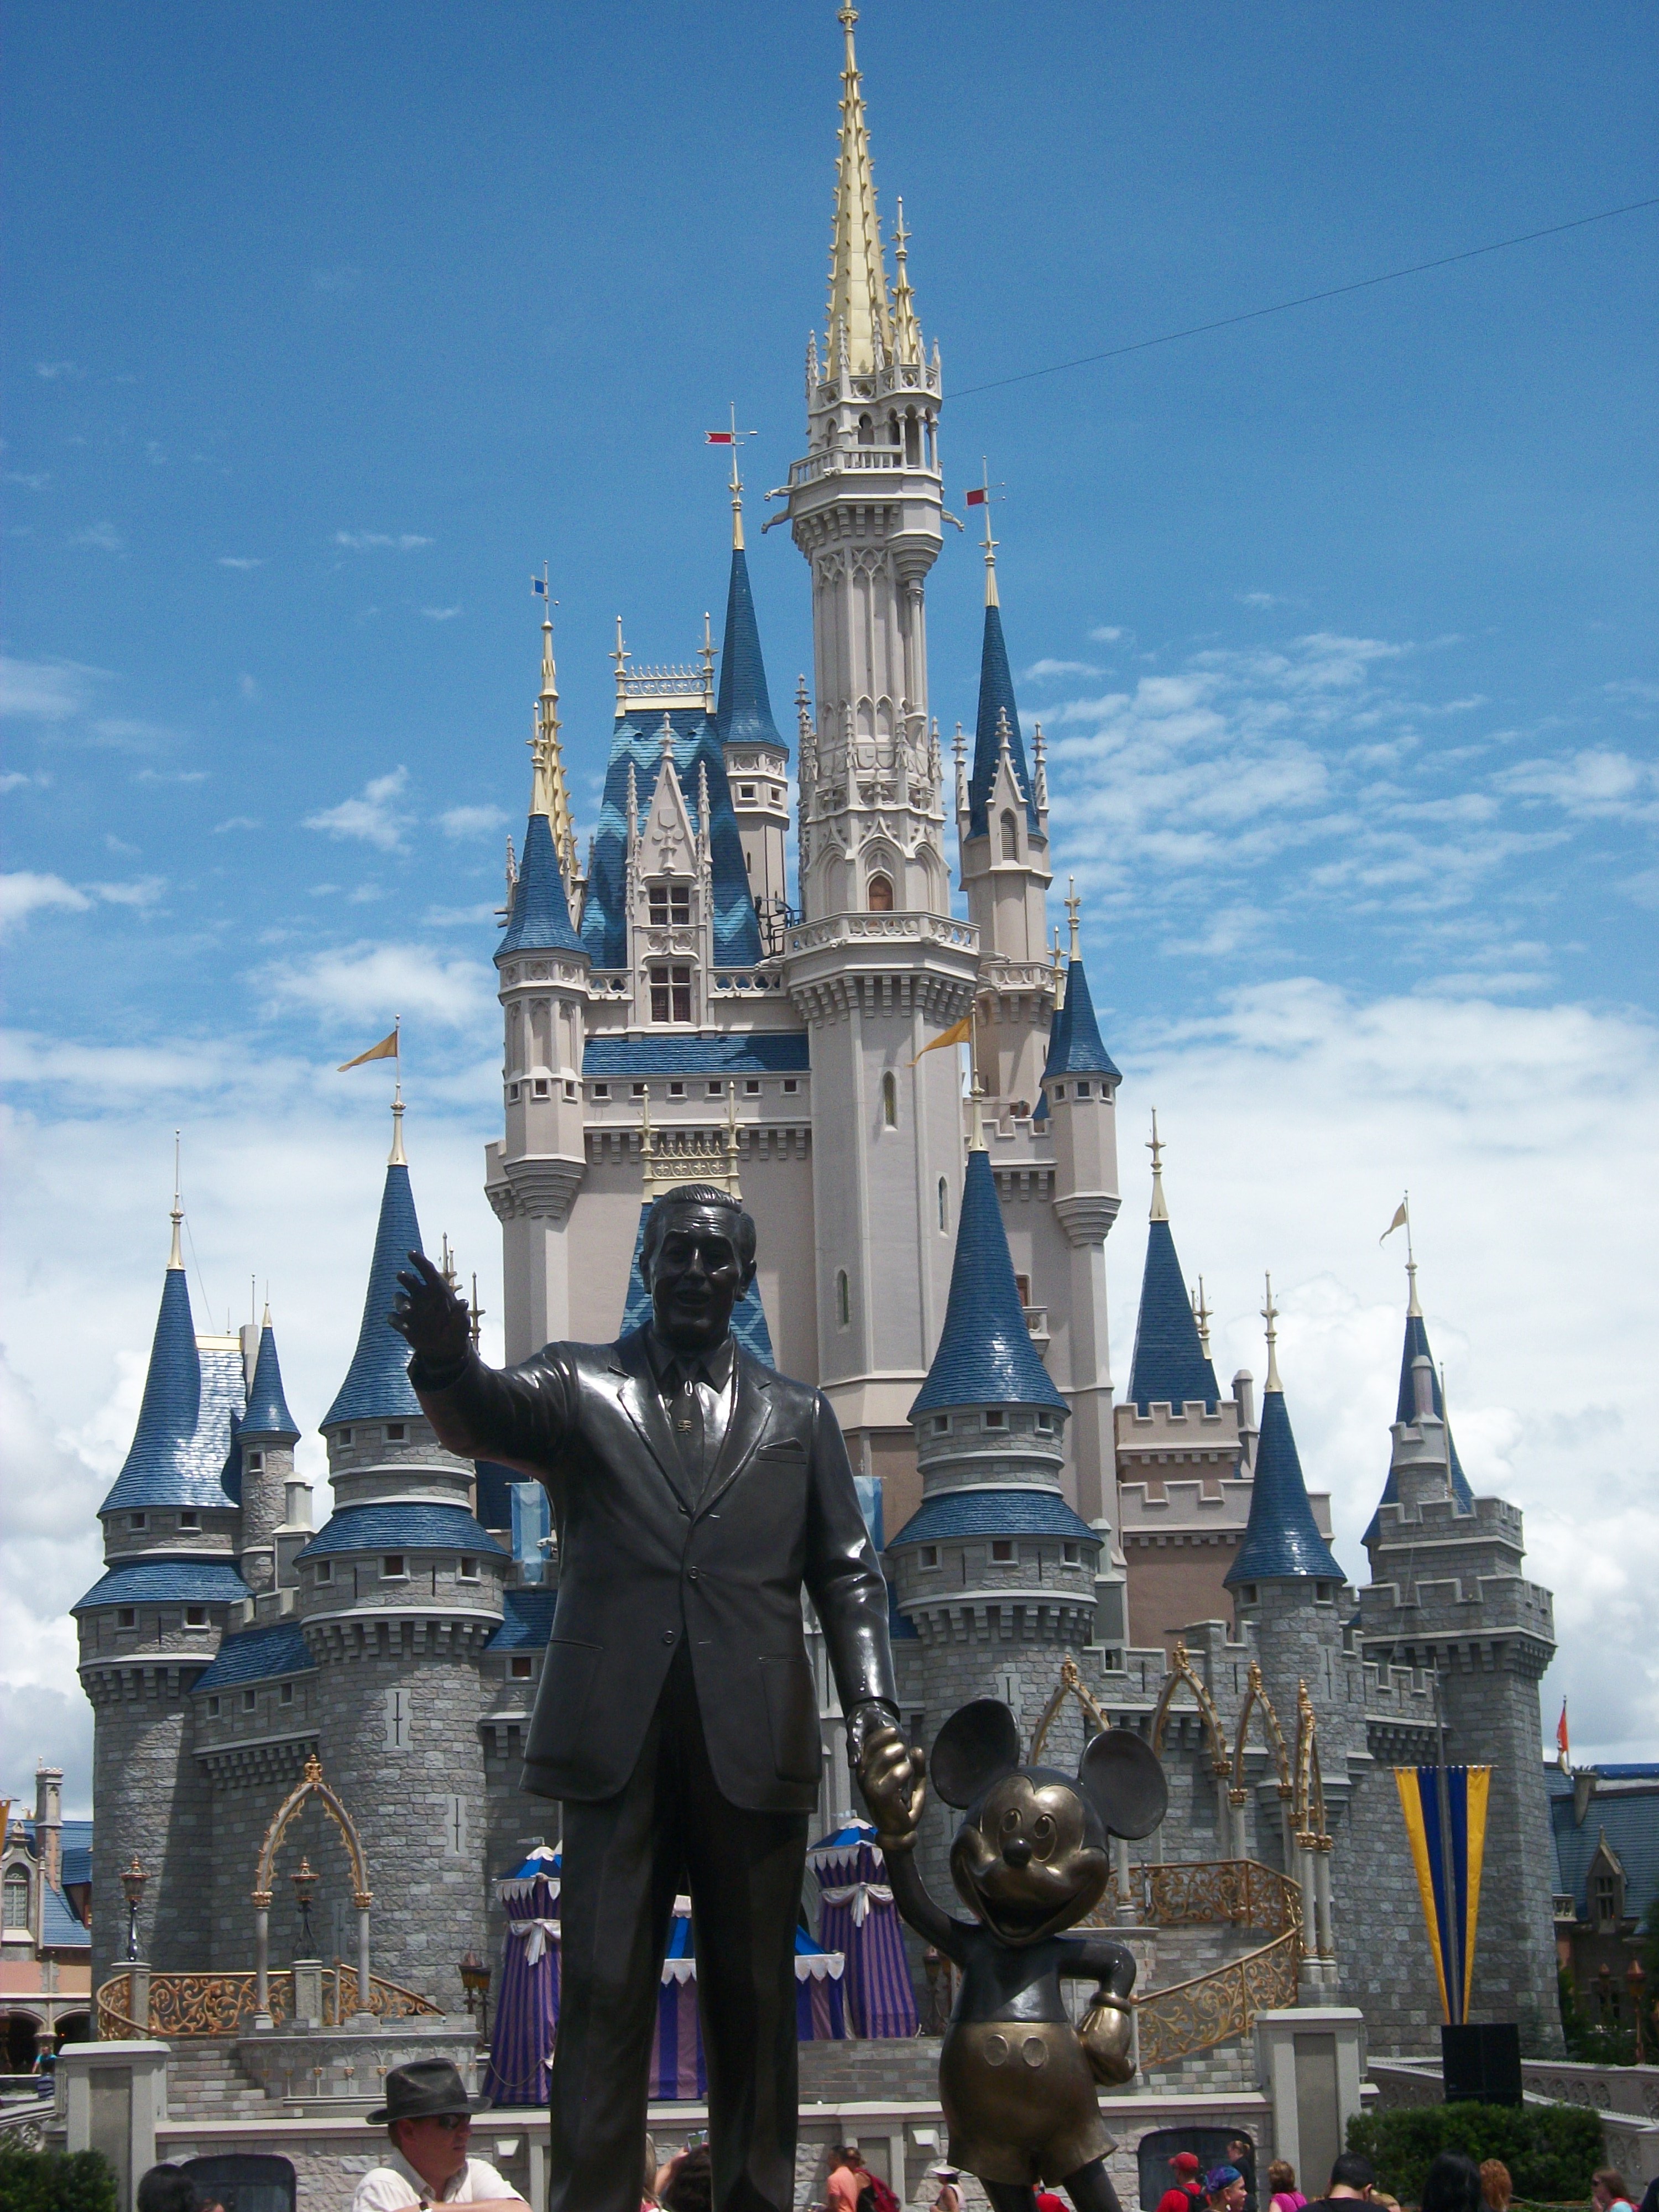 A Little About Fantasyland at Walt Disney World